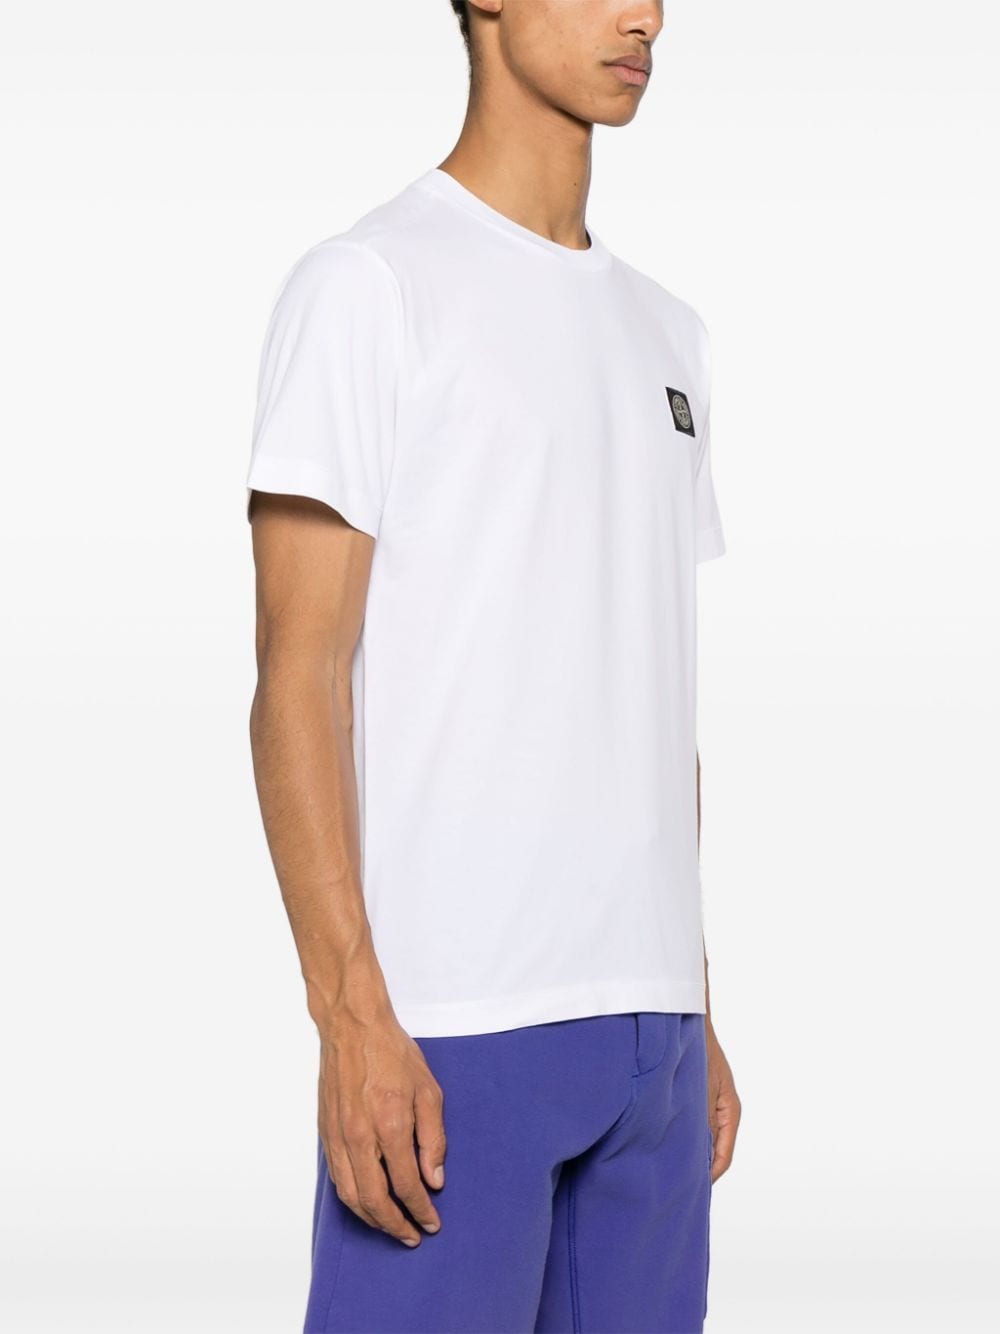 White logopatch T-shirt